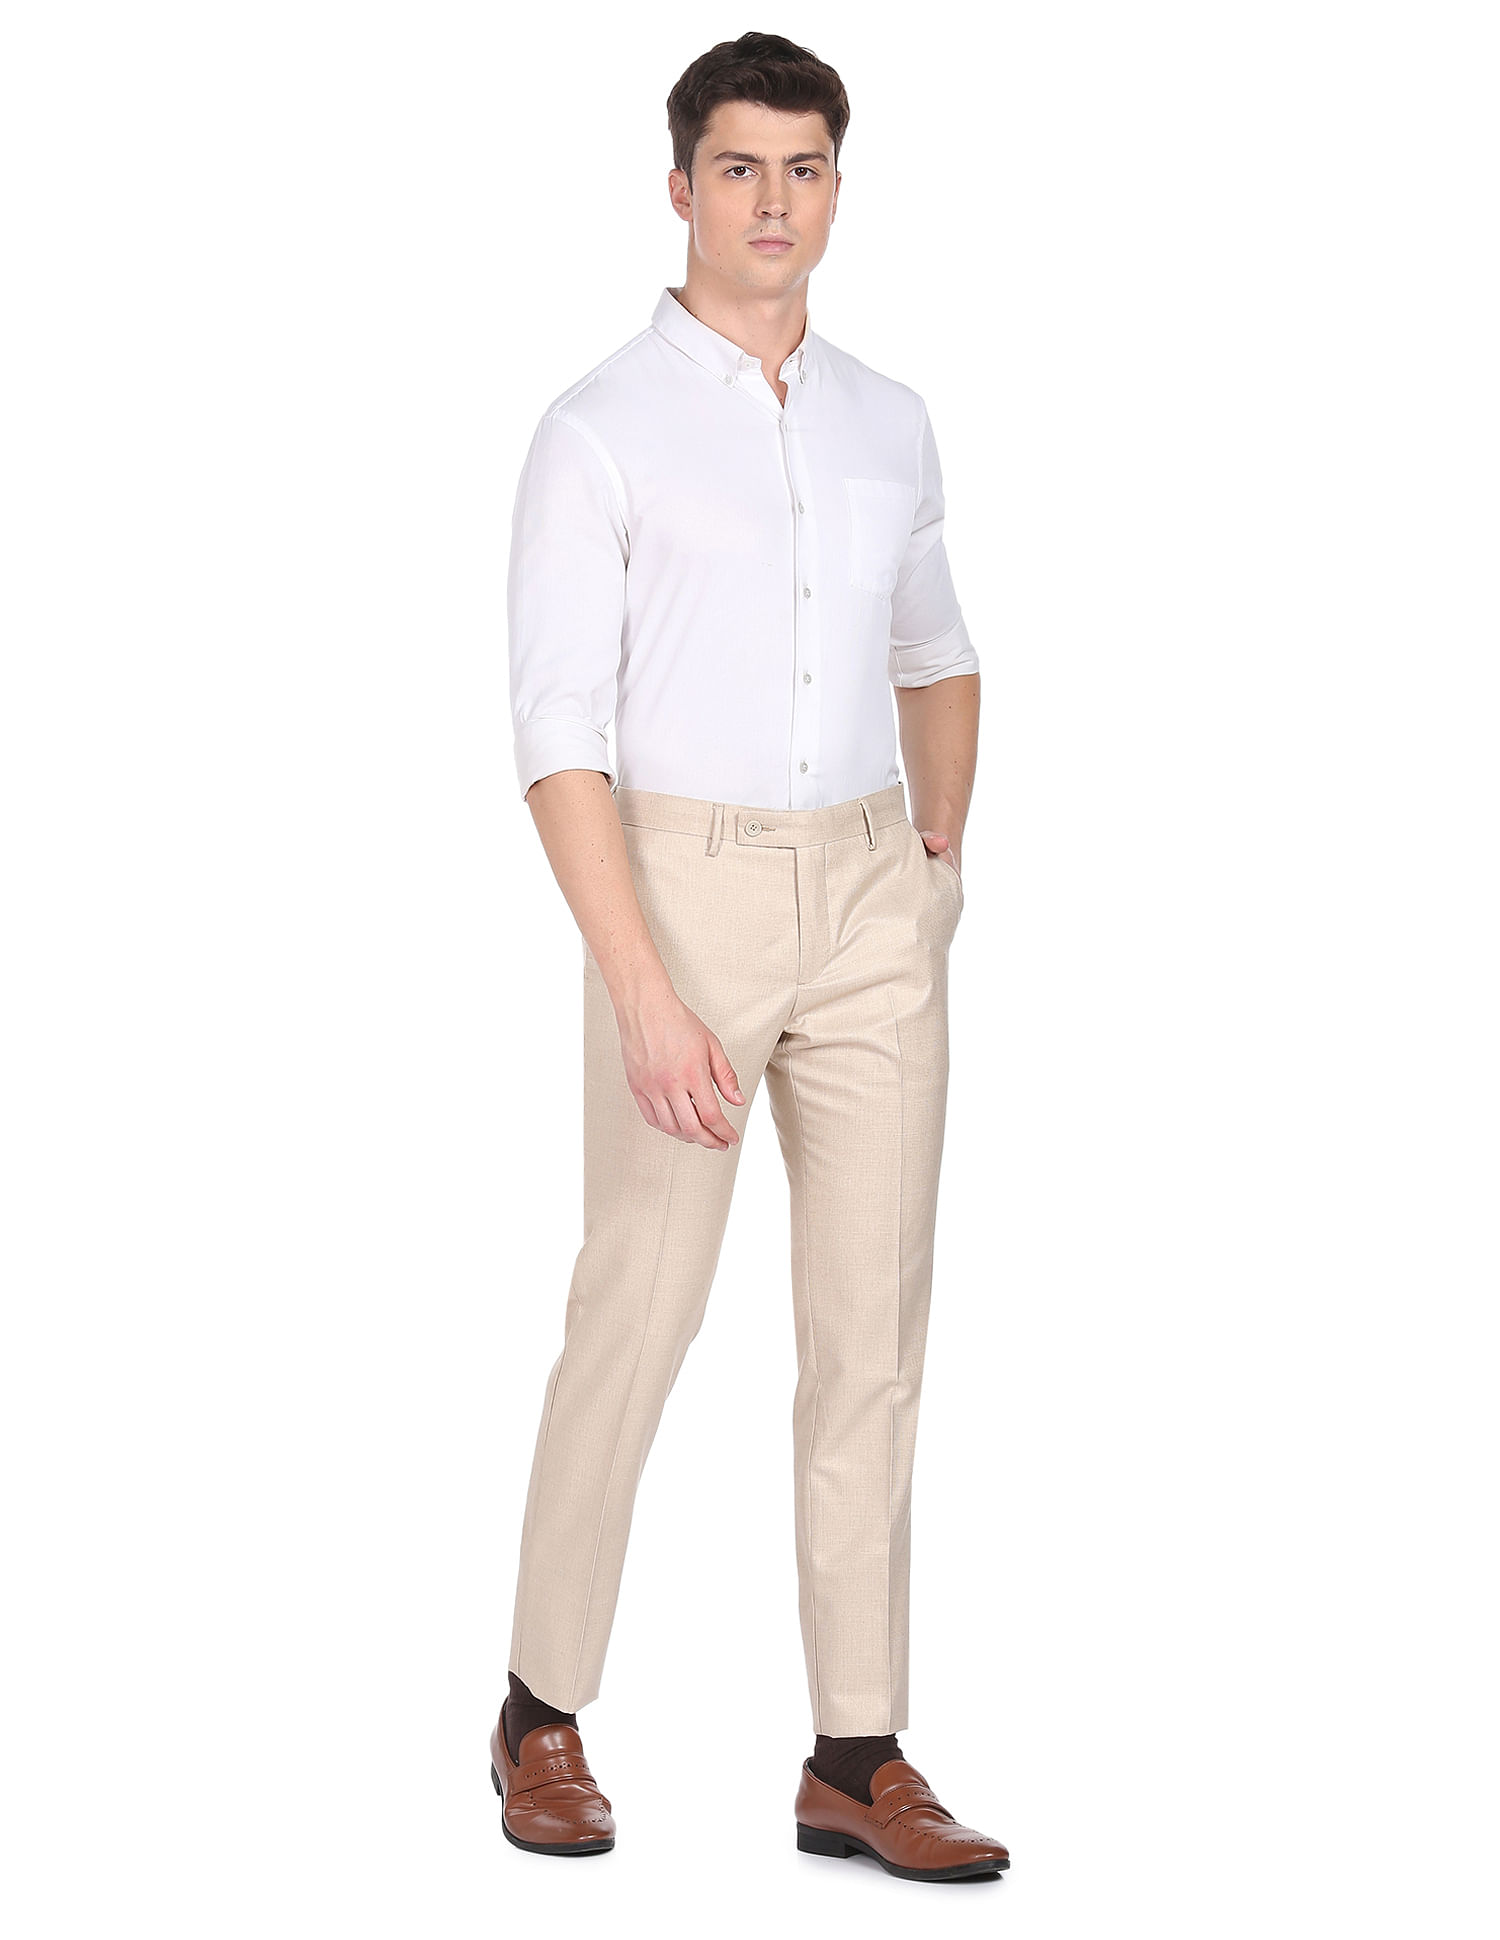 Plain Tailored Smart Trousers  4 Colours  Just 7